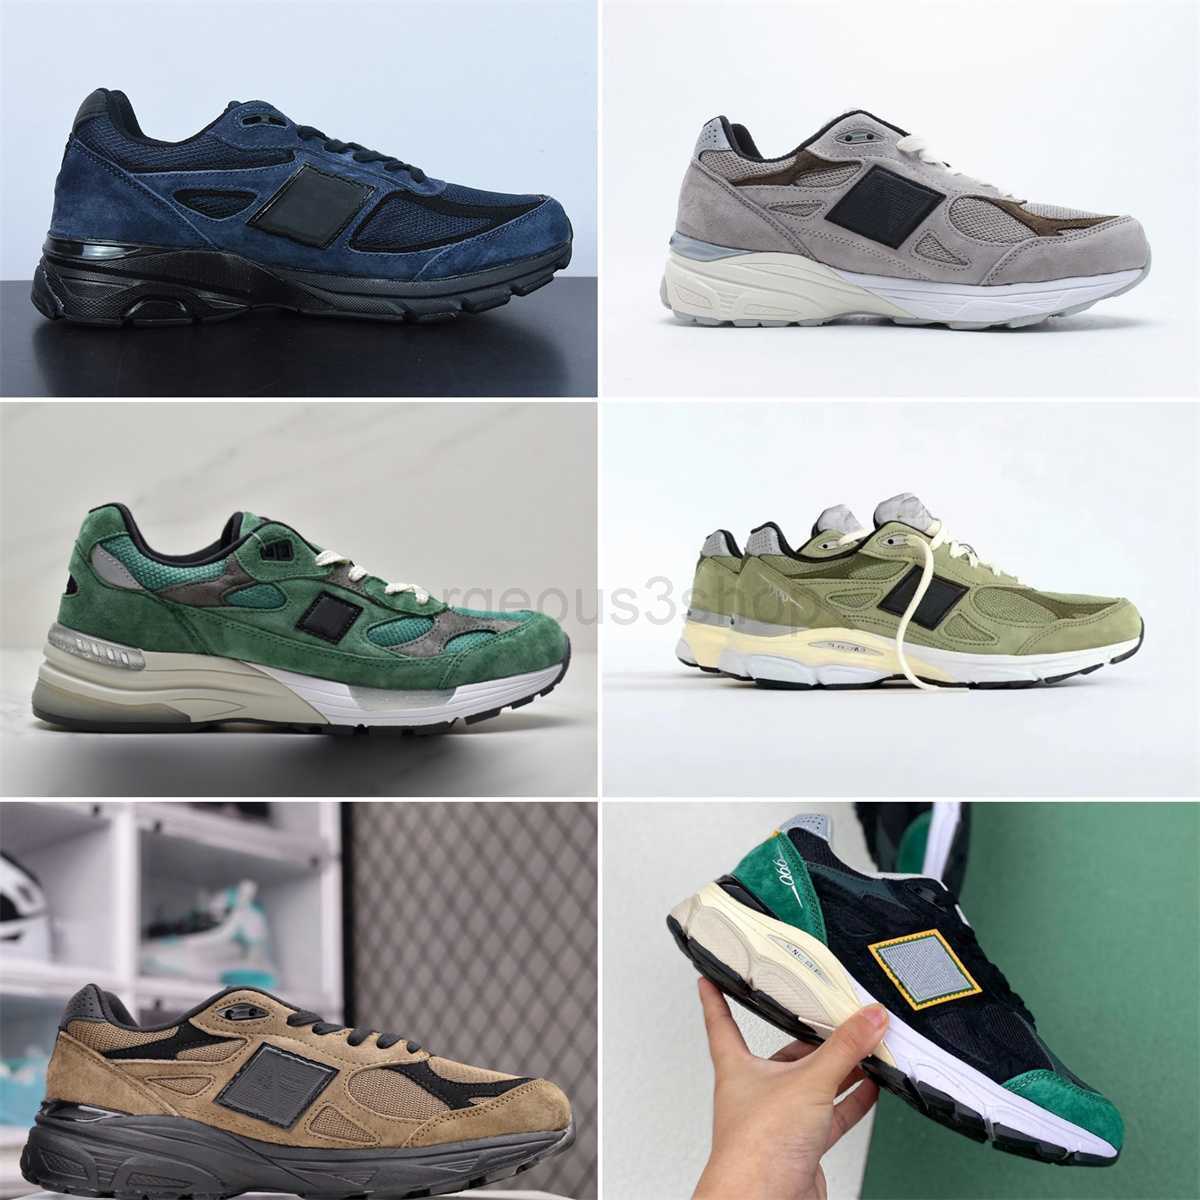 

New Running Shoe Designer Shoes Sneakers M990V3 Grey Green Sport Low Black Chaussures 990 V3 V4 992 Jjjjound Jjjound Olive Kith Men Women 36-44 RKDI, No shoes